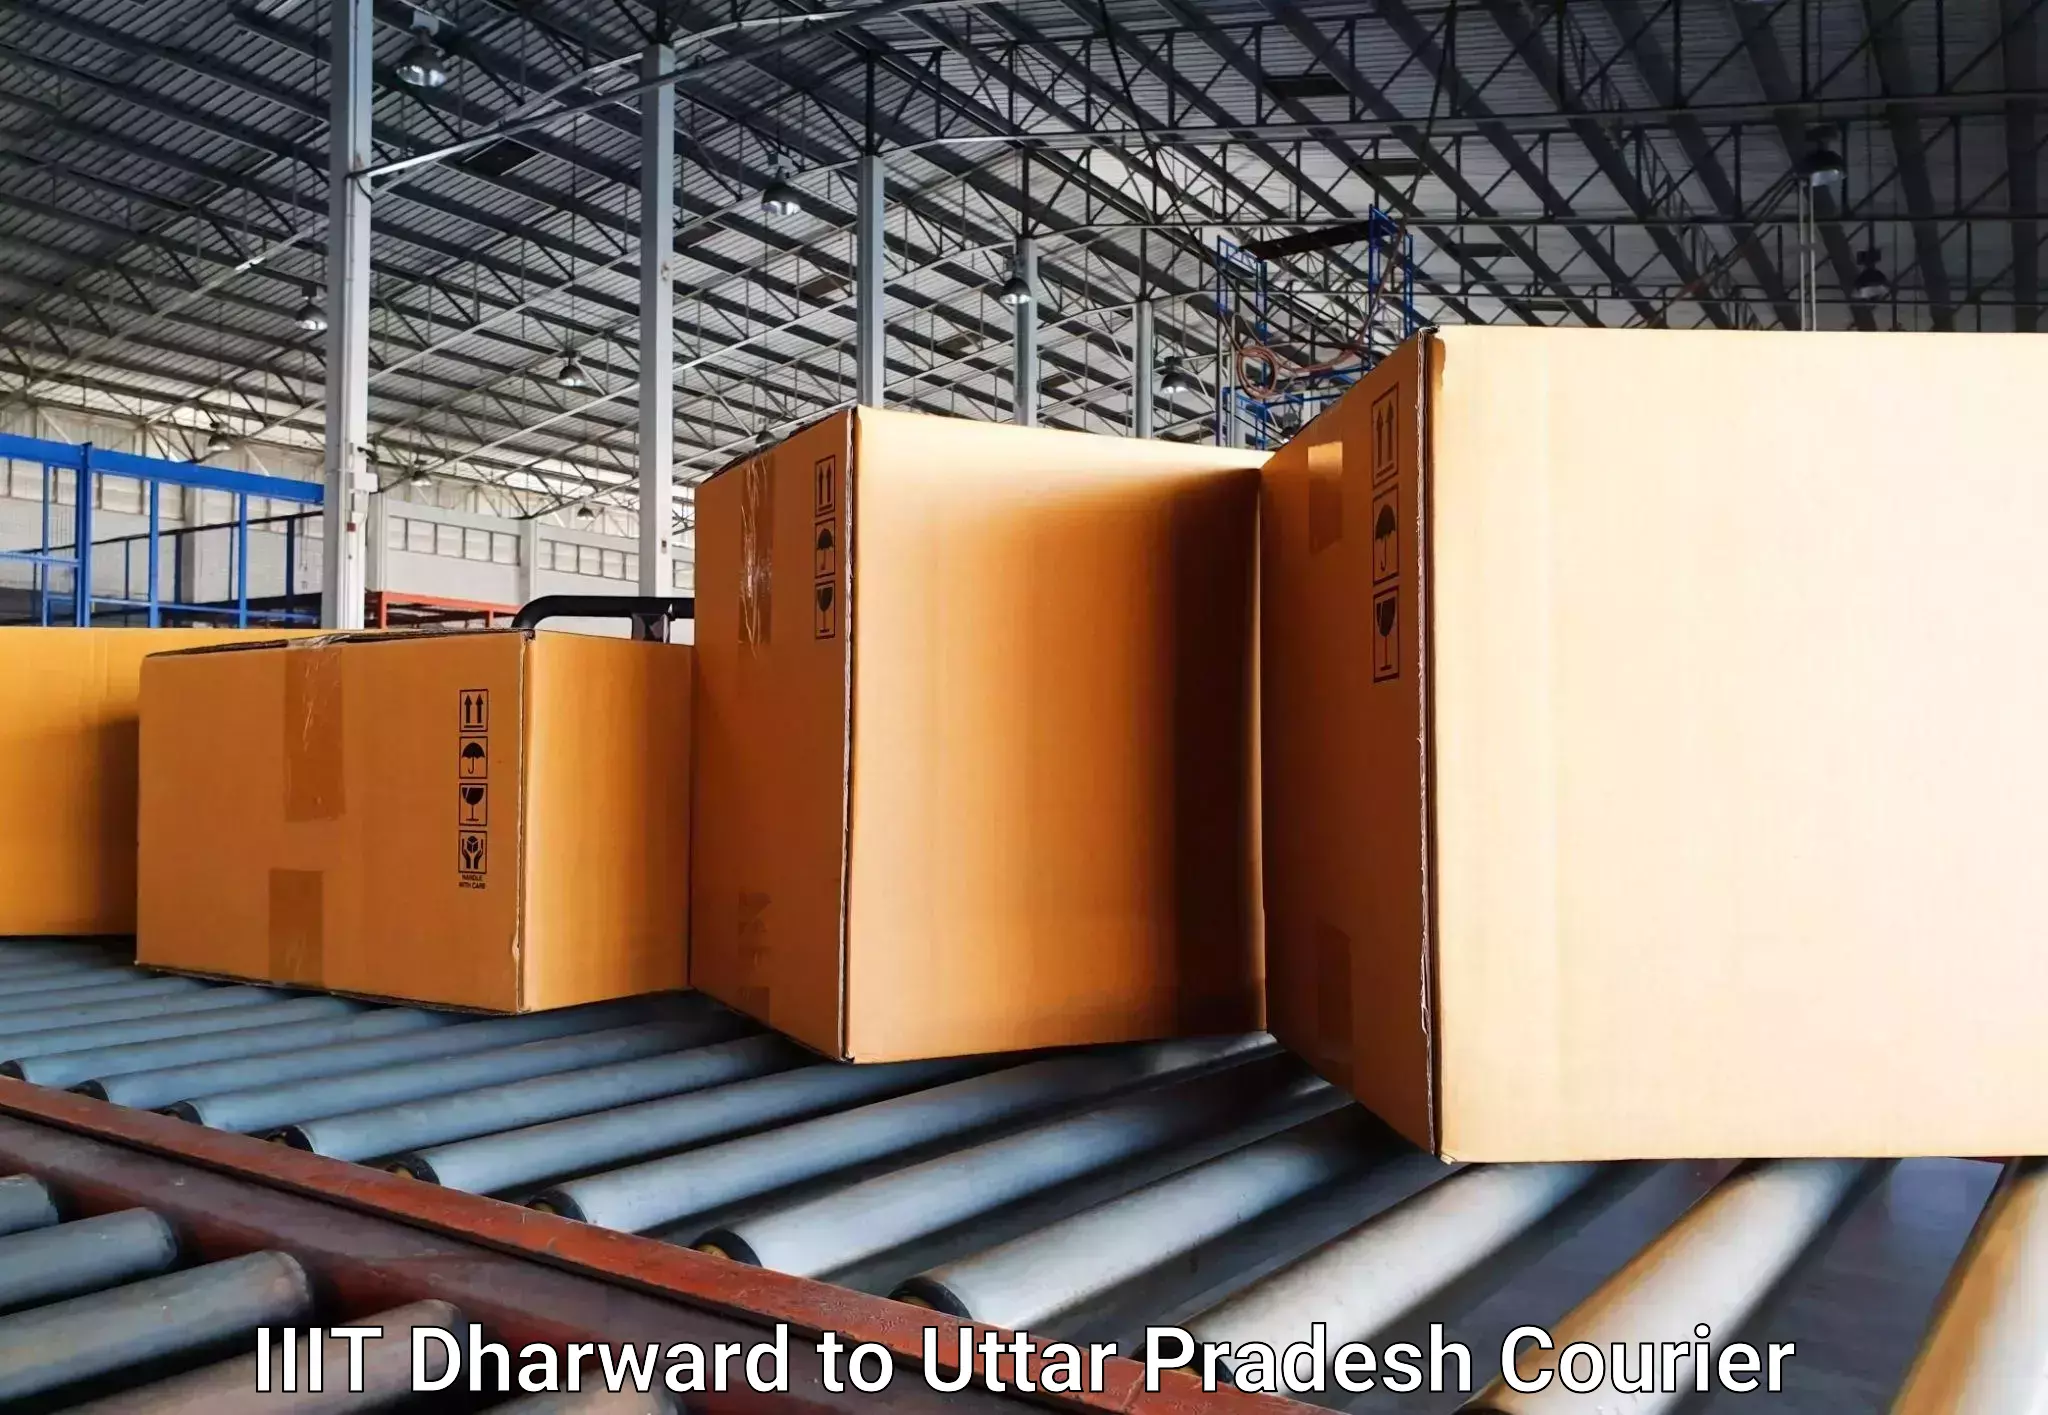 Same day luggage service IIIT Dharward to Uttar Pradesh